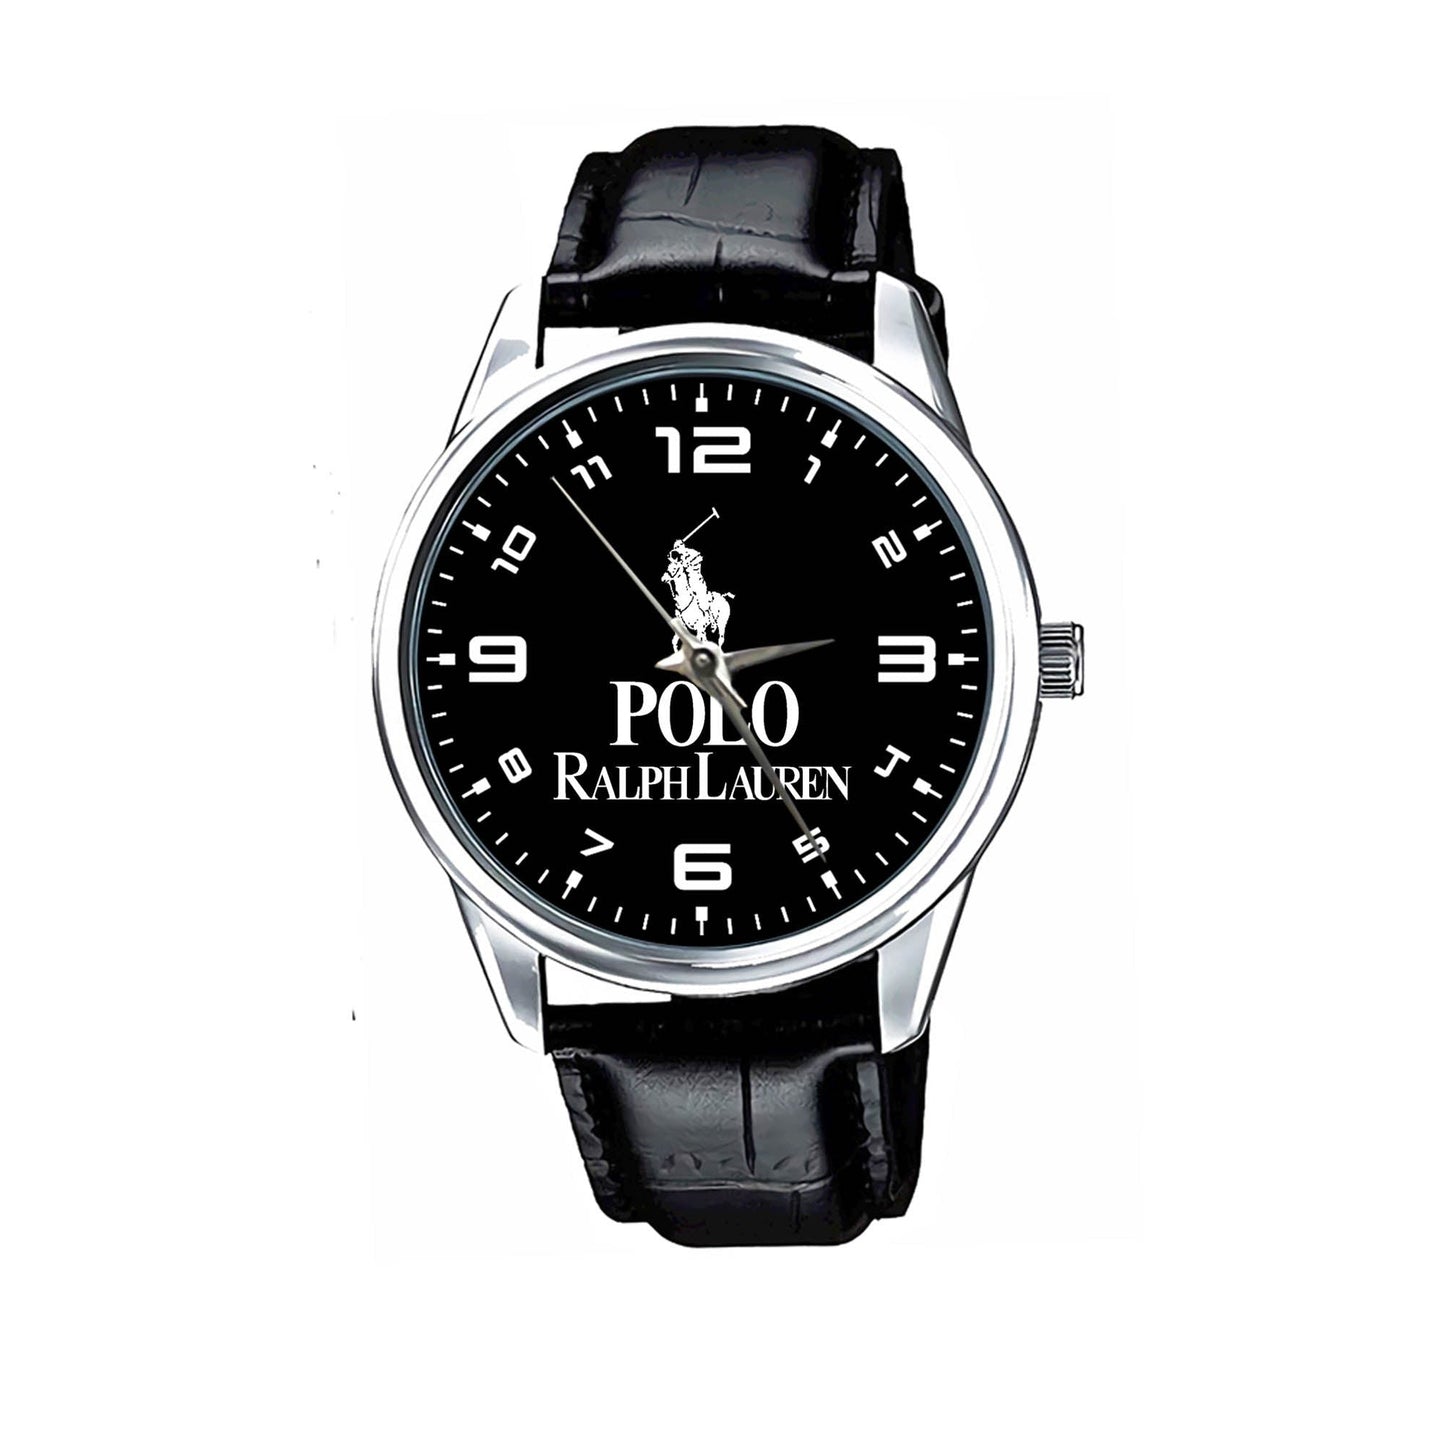 Polo Ralph Lauren Watches KP652